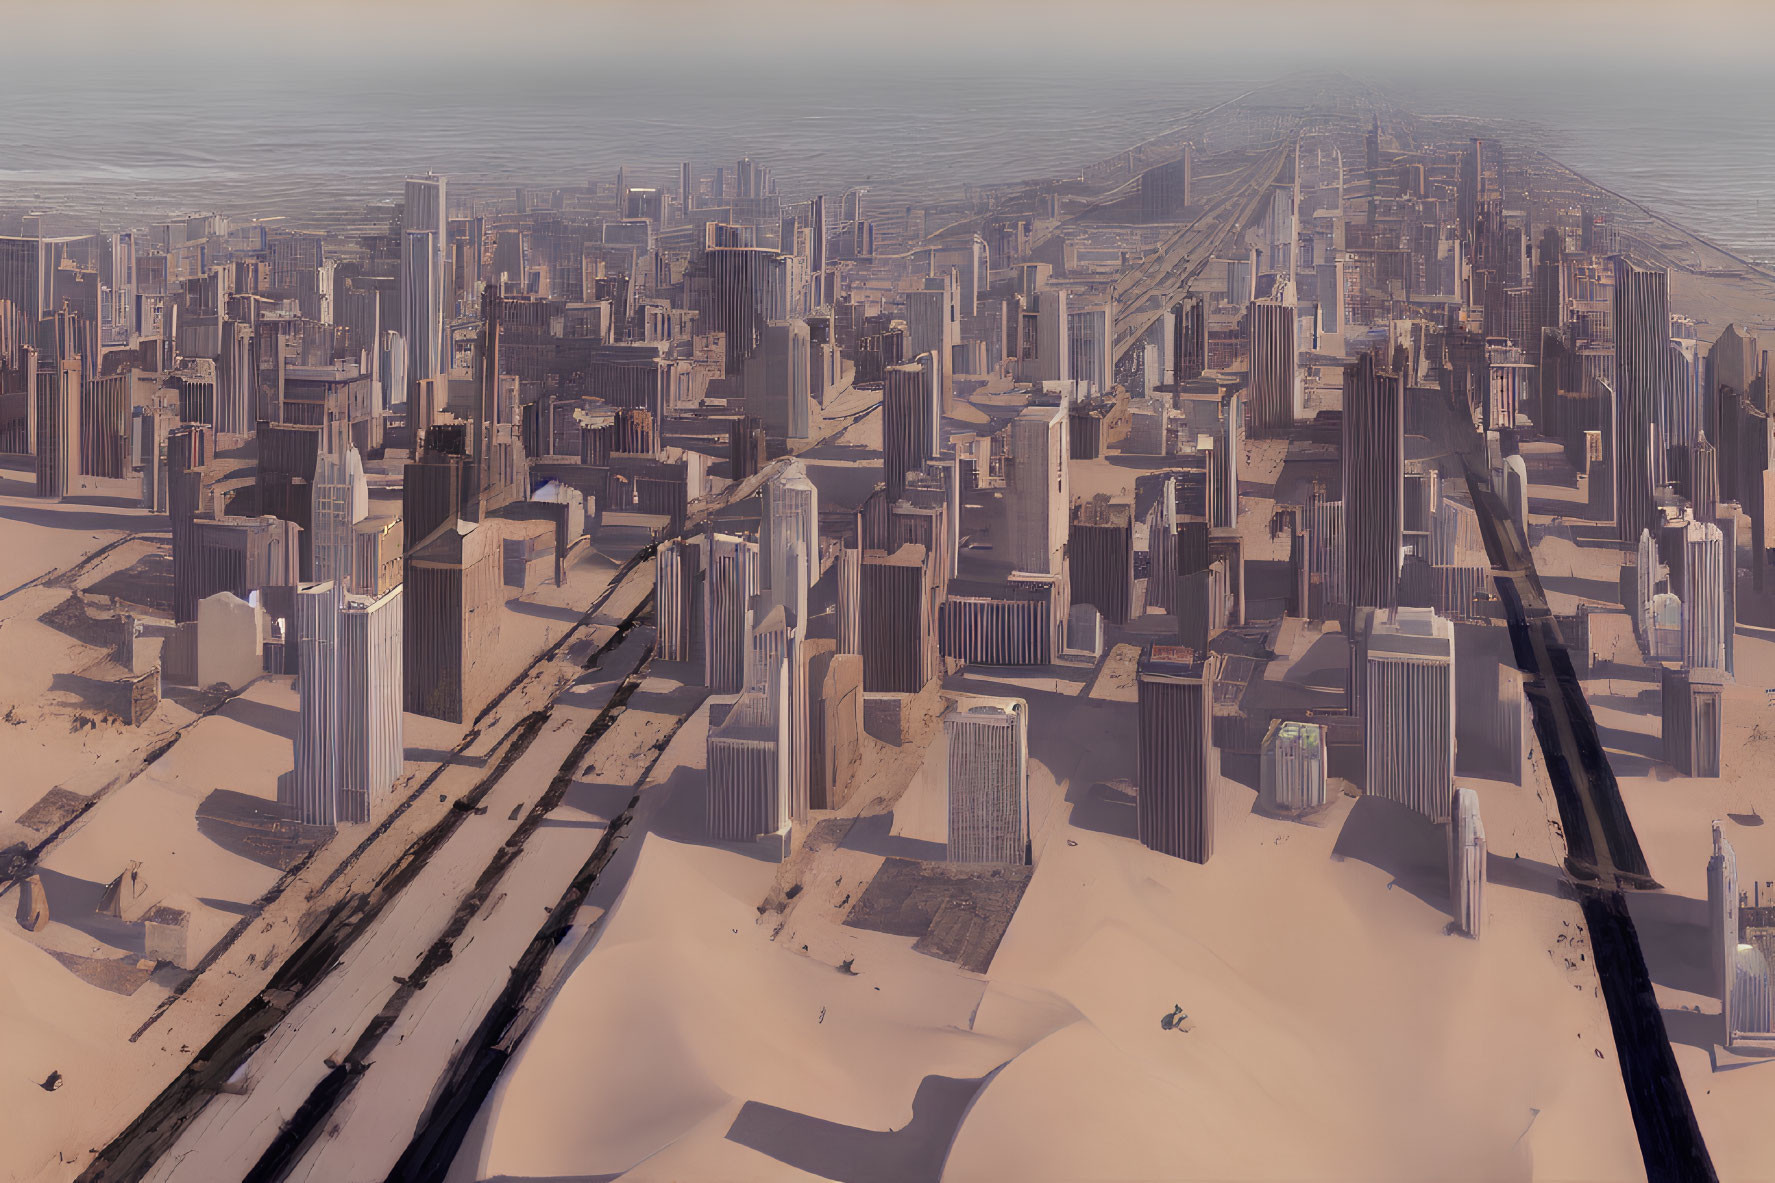 Urban desert landscape with skyscrapers and dunes under hazy sky